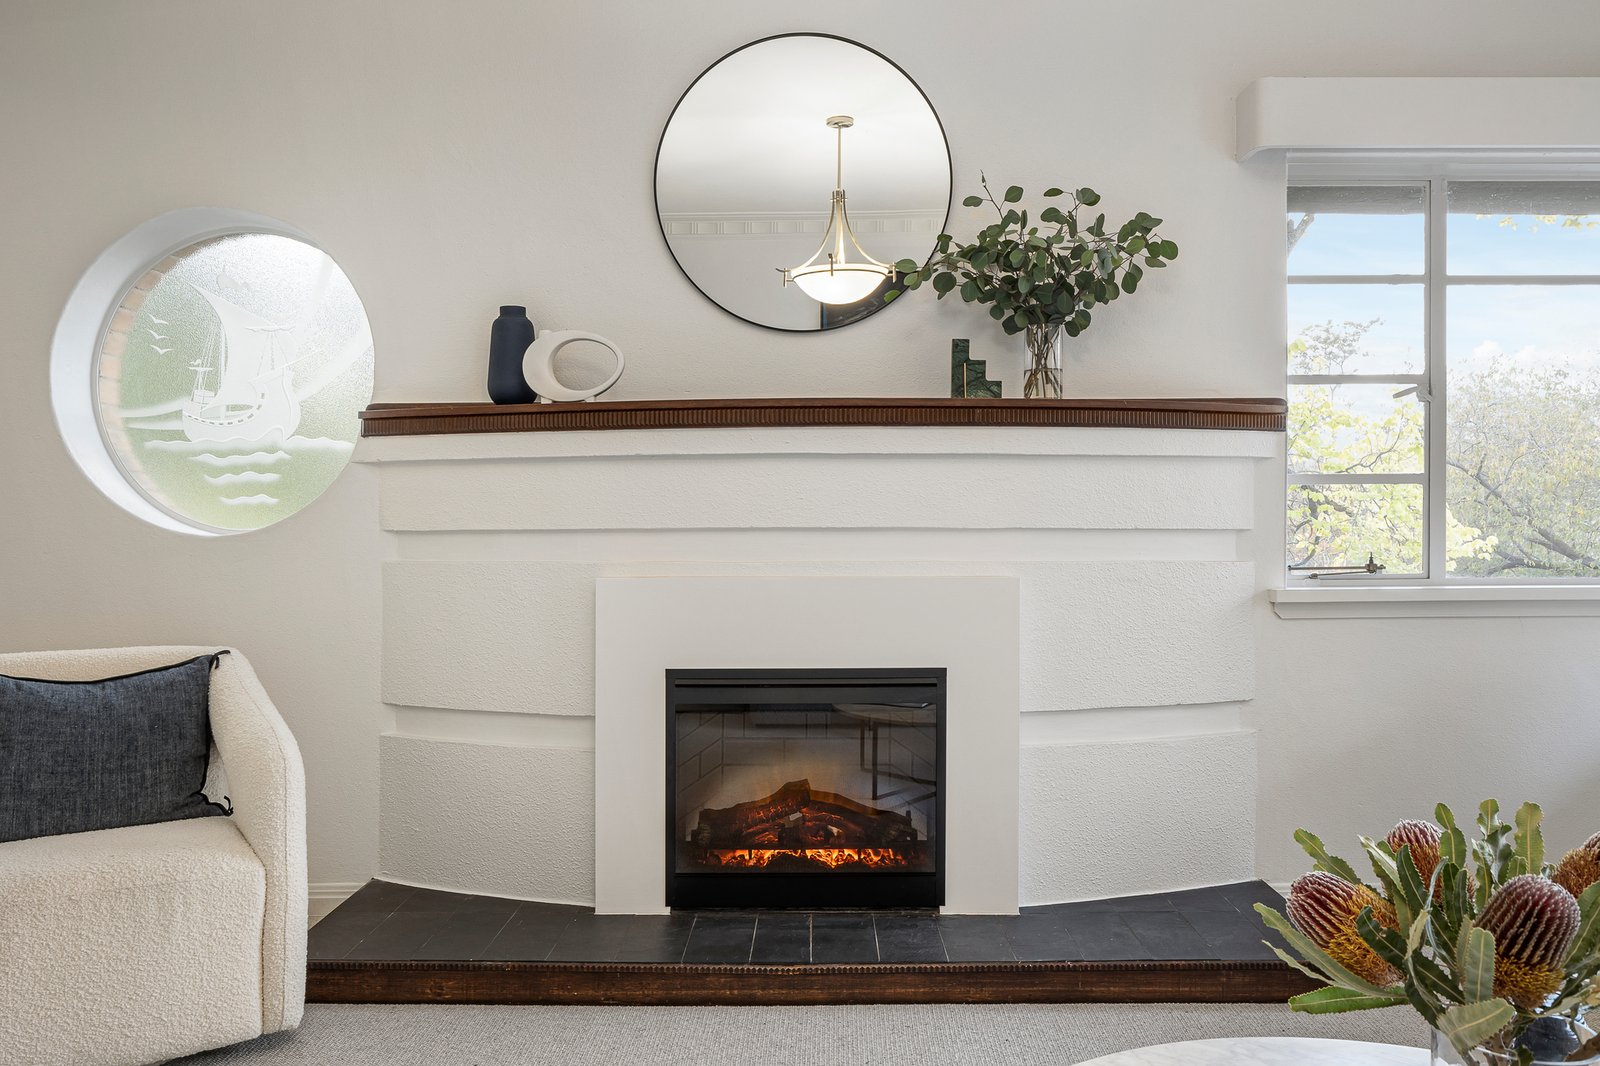 Image of fireplace